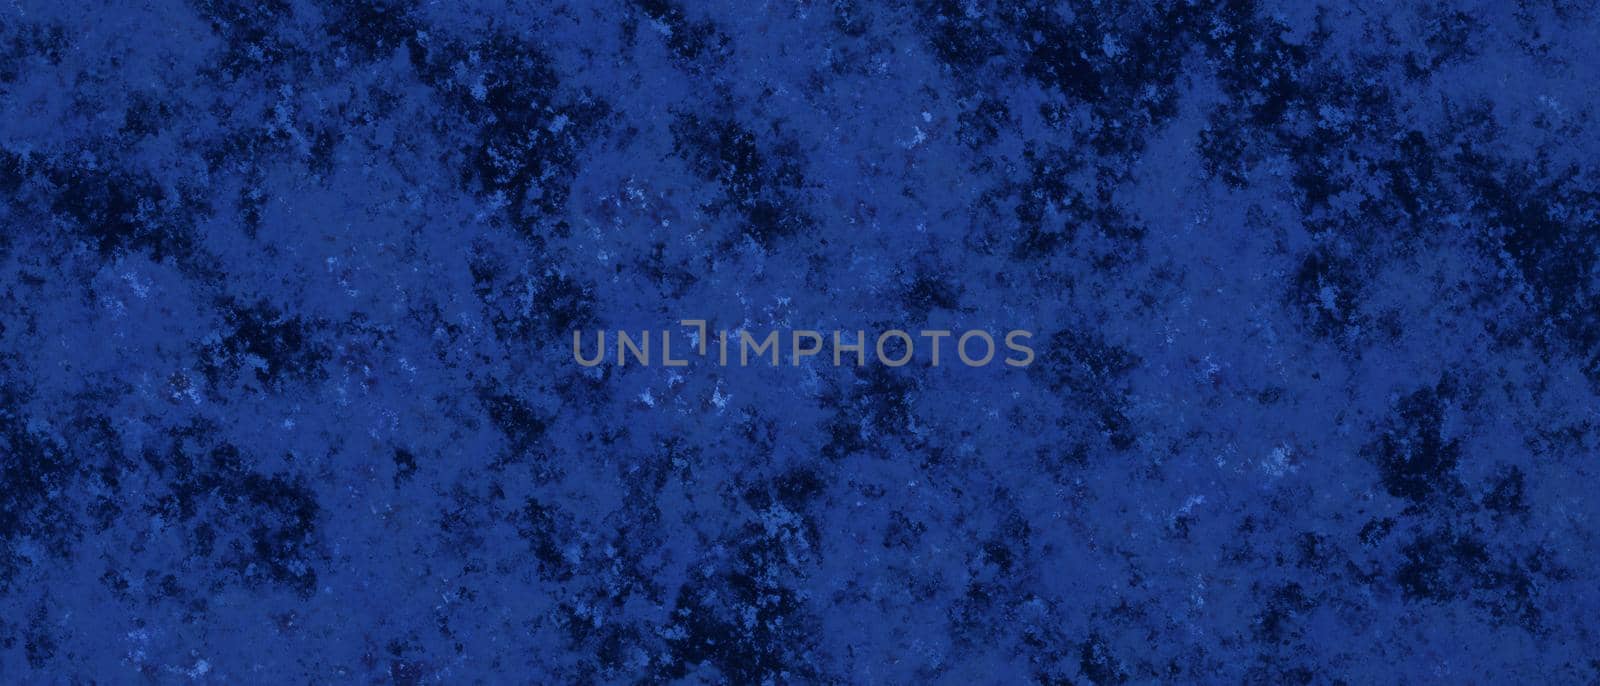 Sapphire dark blue background marbled grunge texture wallpaper by yay_lmrb